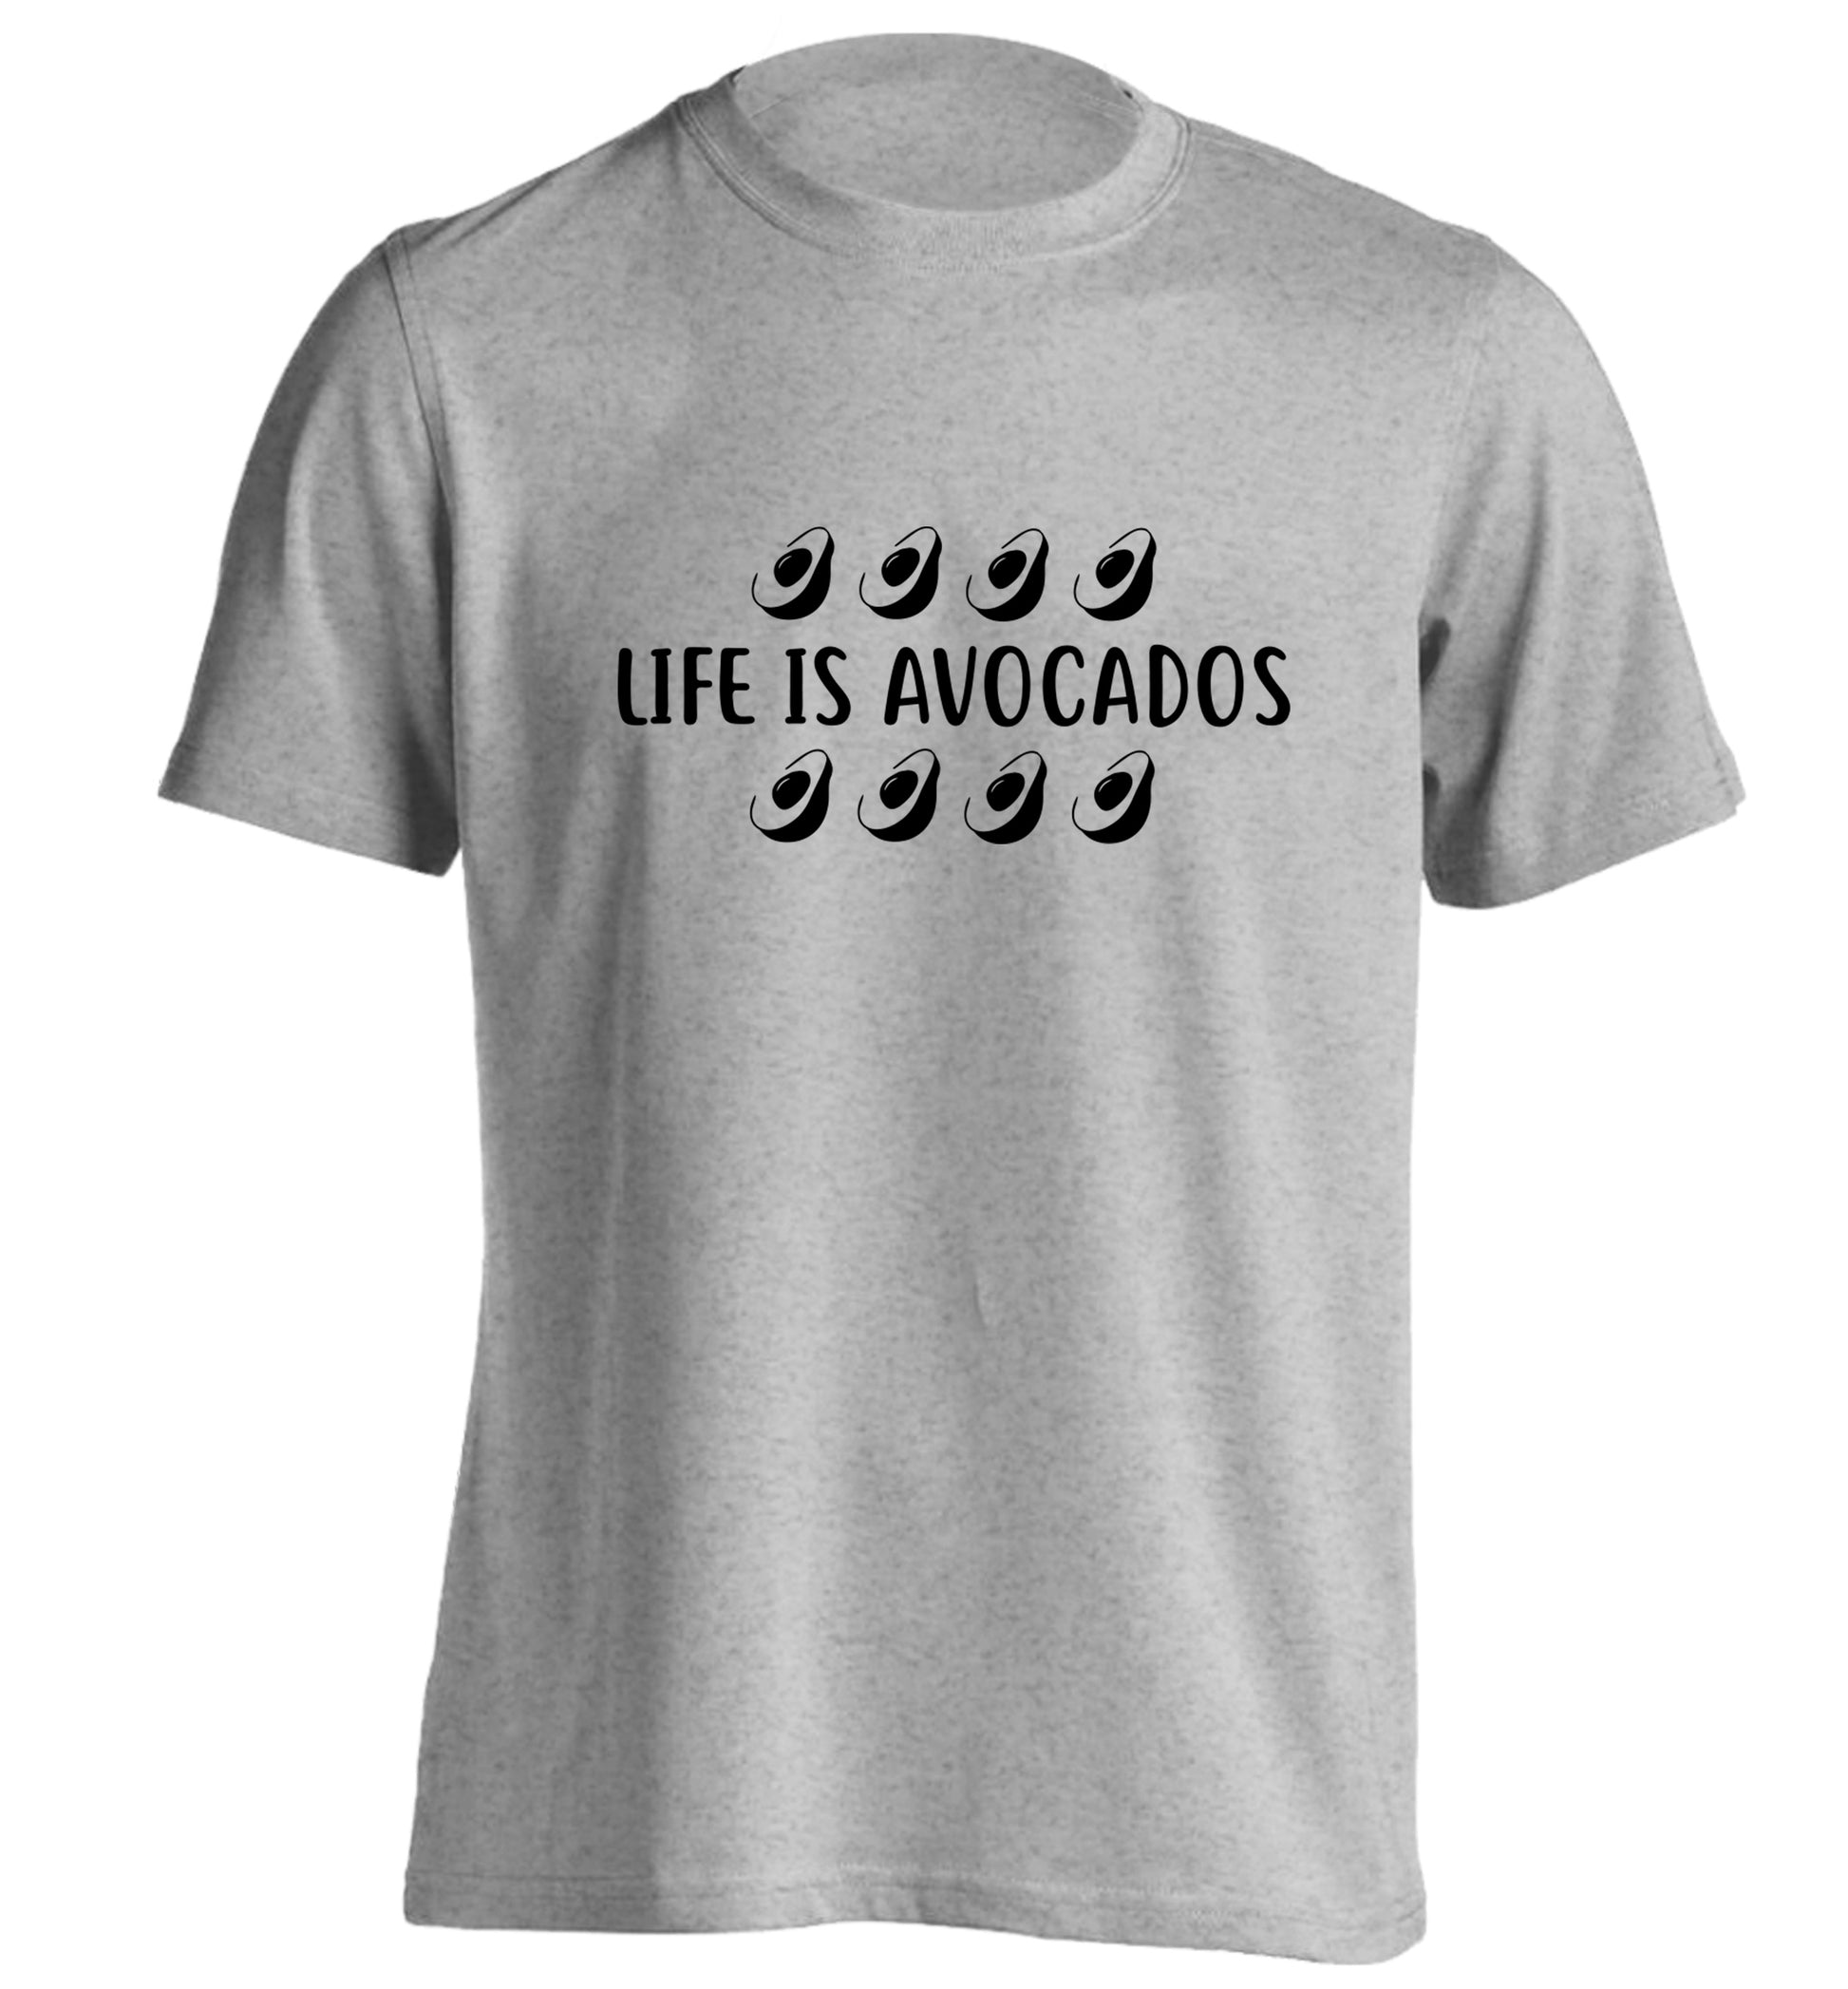 Life is avocados adults unisex grey Tshirt 2XL